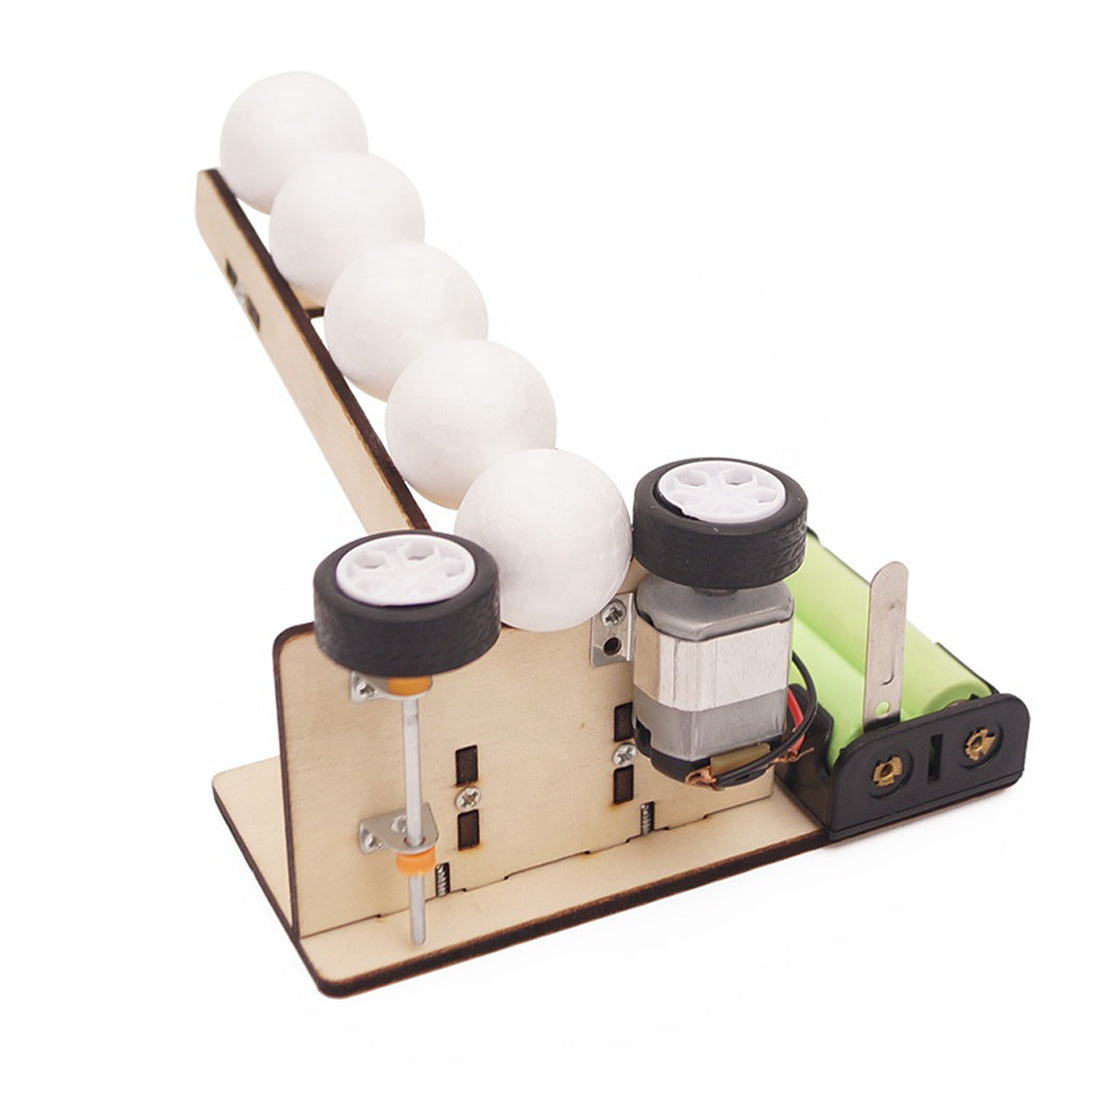 stem-diy-science-educational-handmade-automatic-ball-pitching-machine.jpg